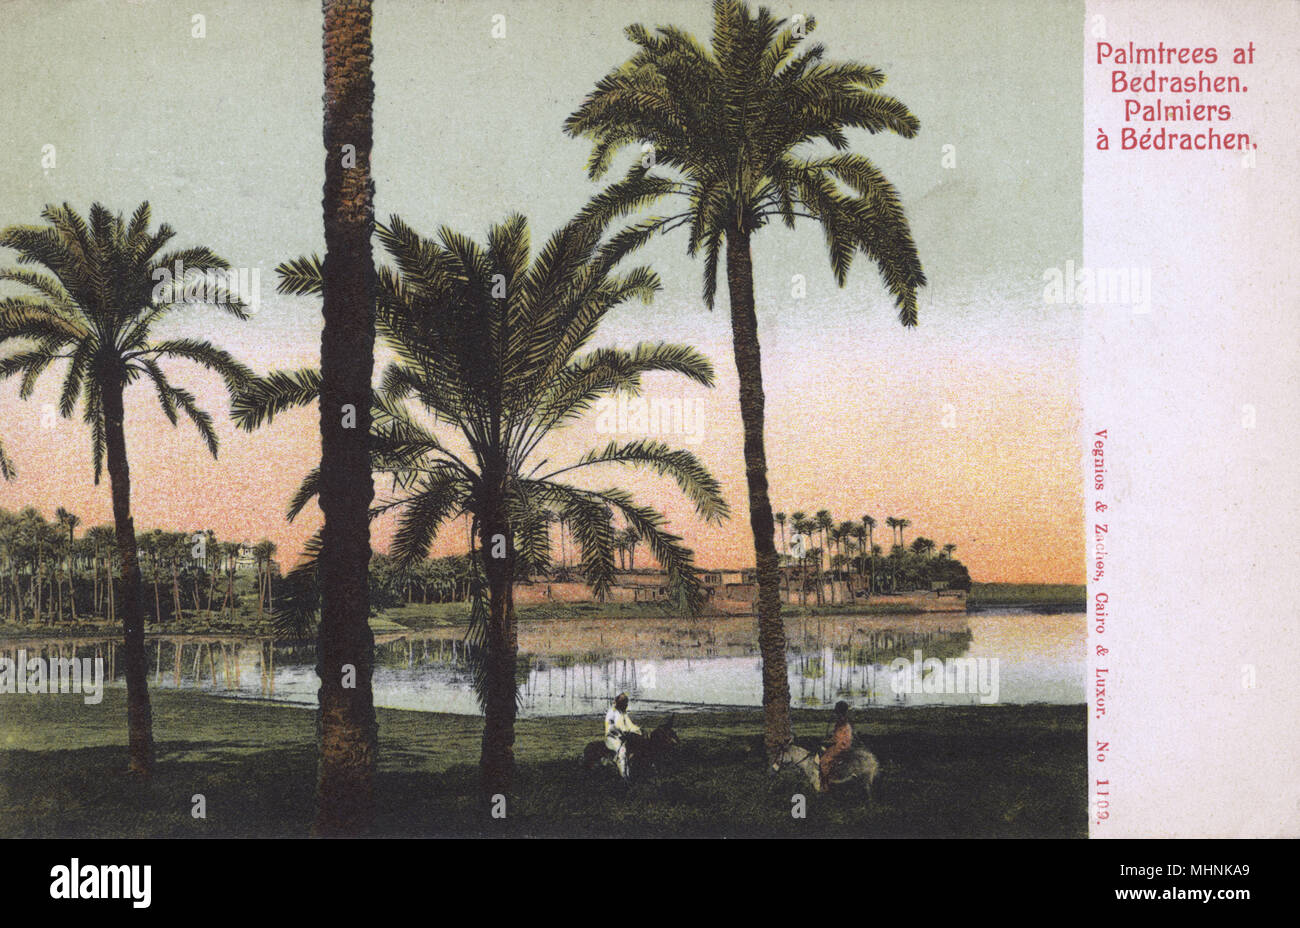 Palm tress at Bedrashin, Giza, Egypt     Date: 1918 Stock Photo